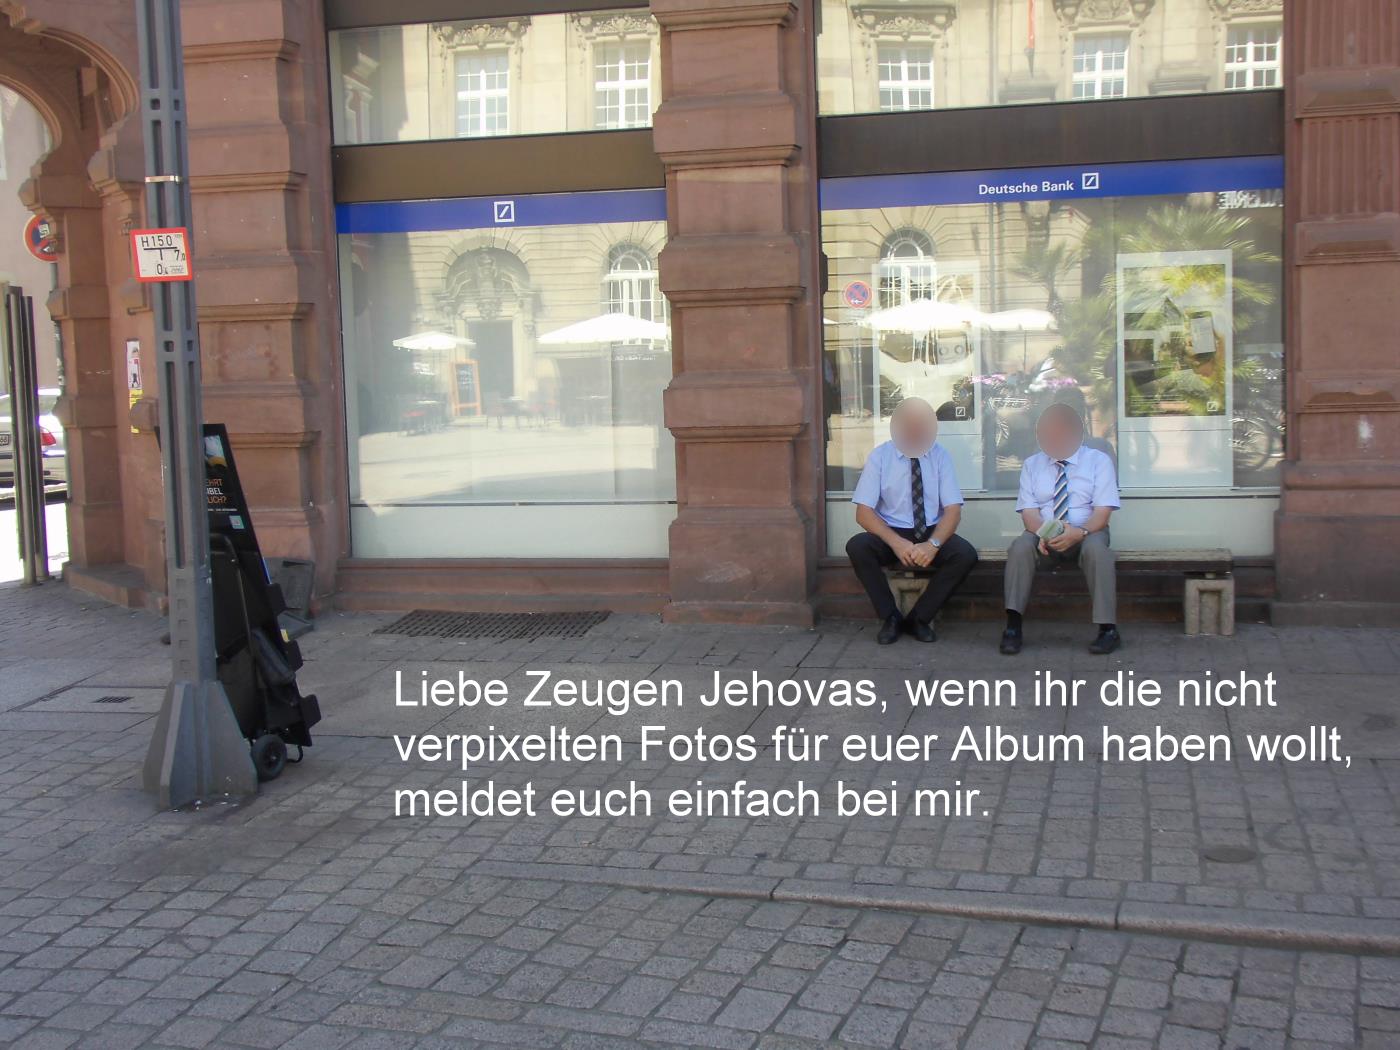 Jehovah's Witnesses in Speyer: Spider seeks flies